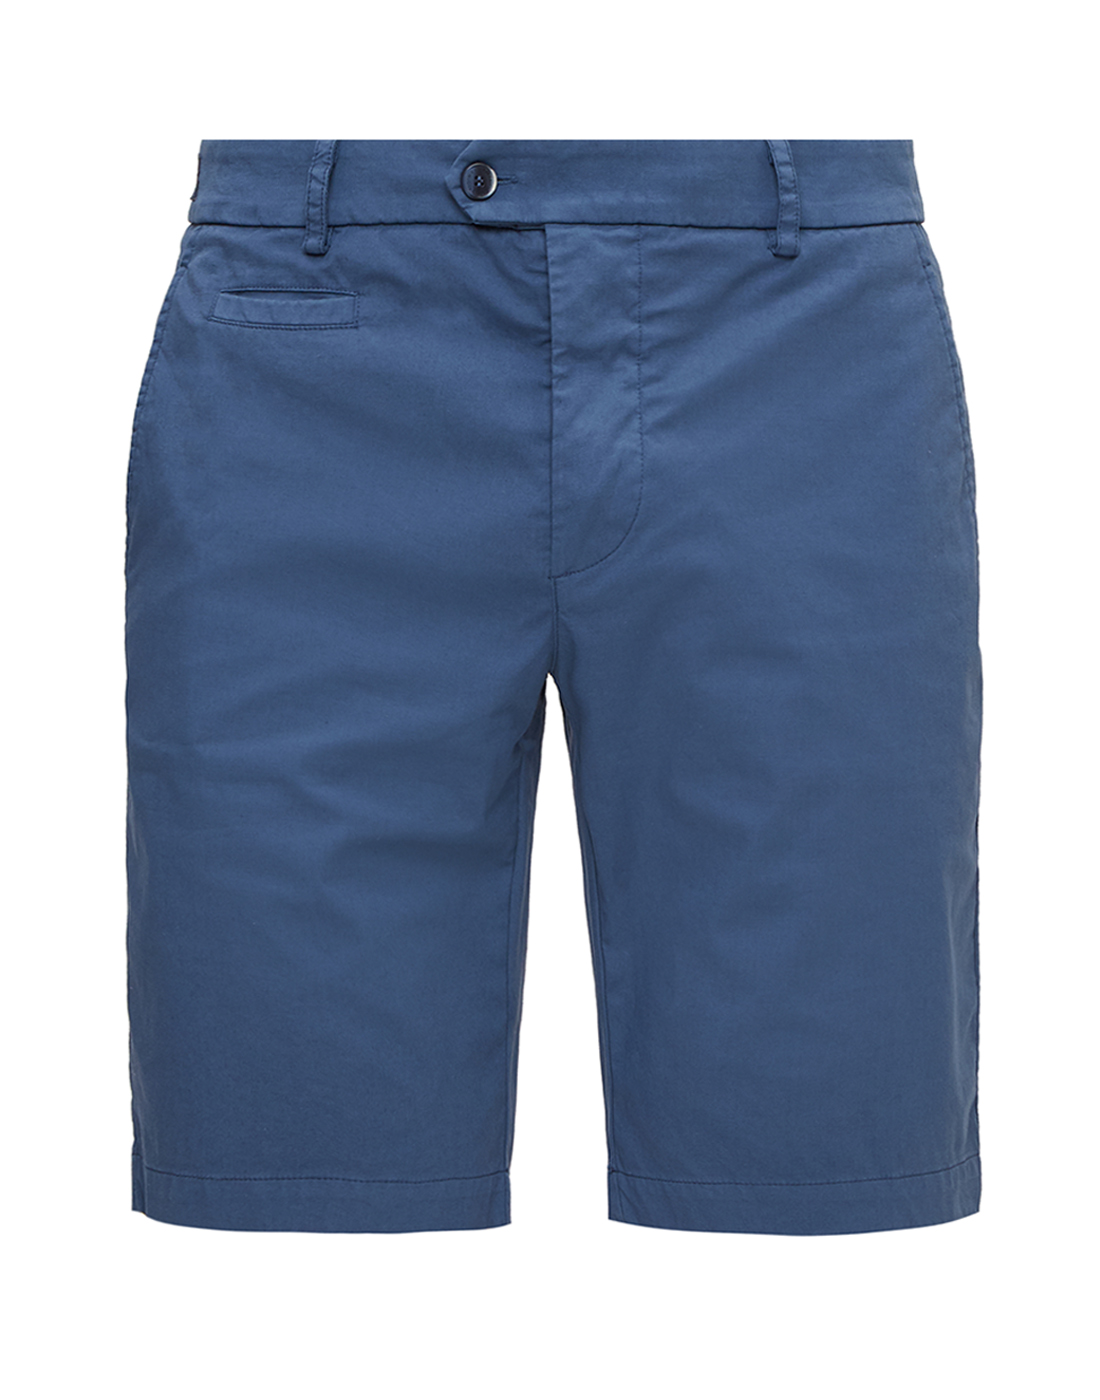 Мужские синие шорты Capobianco S10M816.AC01.JEANS-1